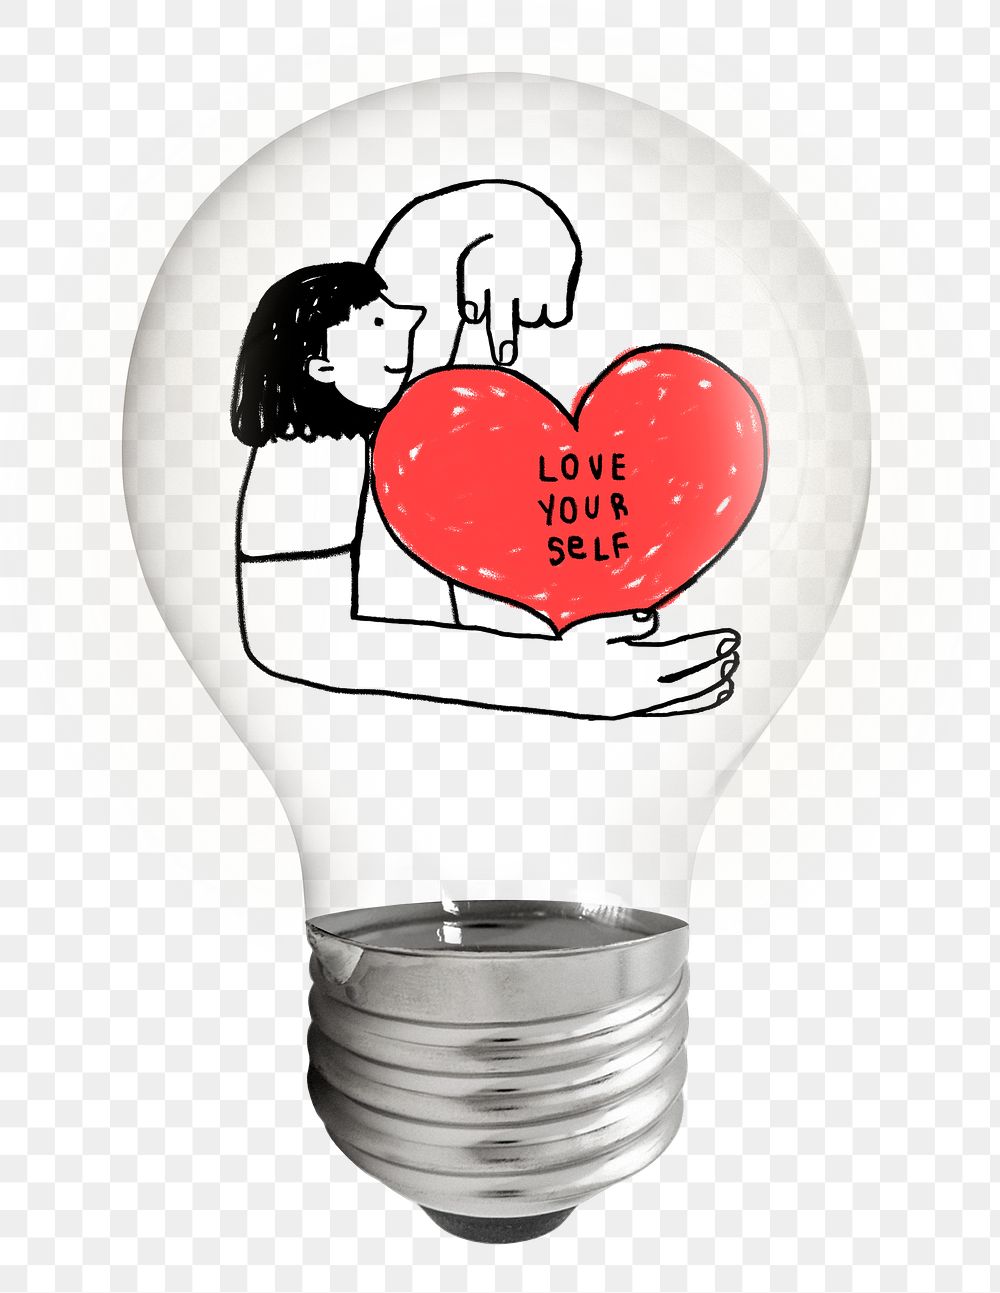 Love Yourself png doodle sticker, light bulb self-love creative illustration on transparent background